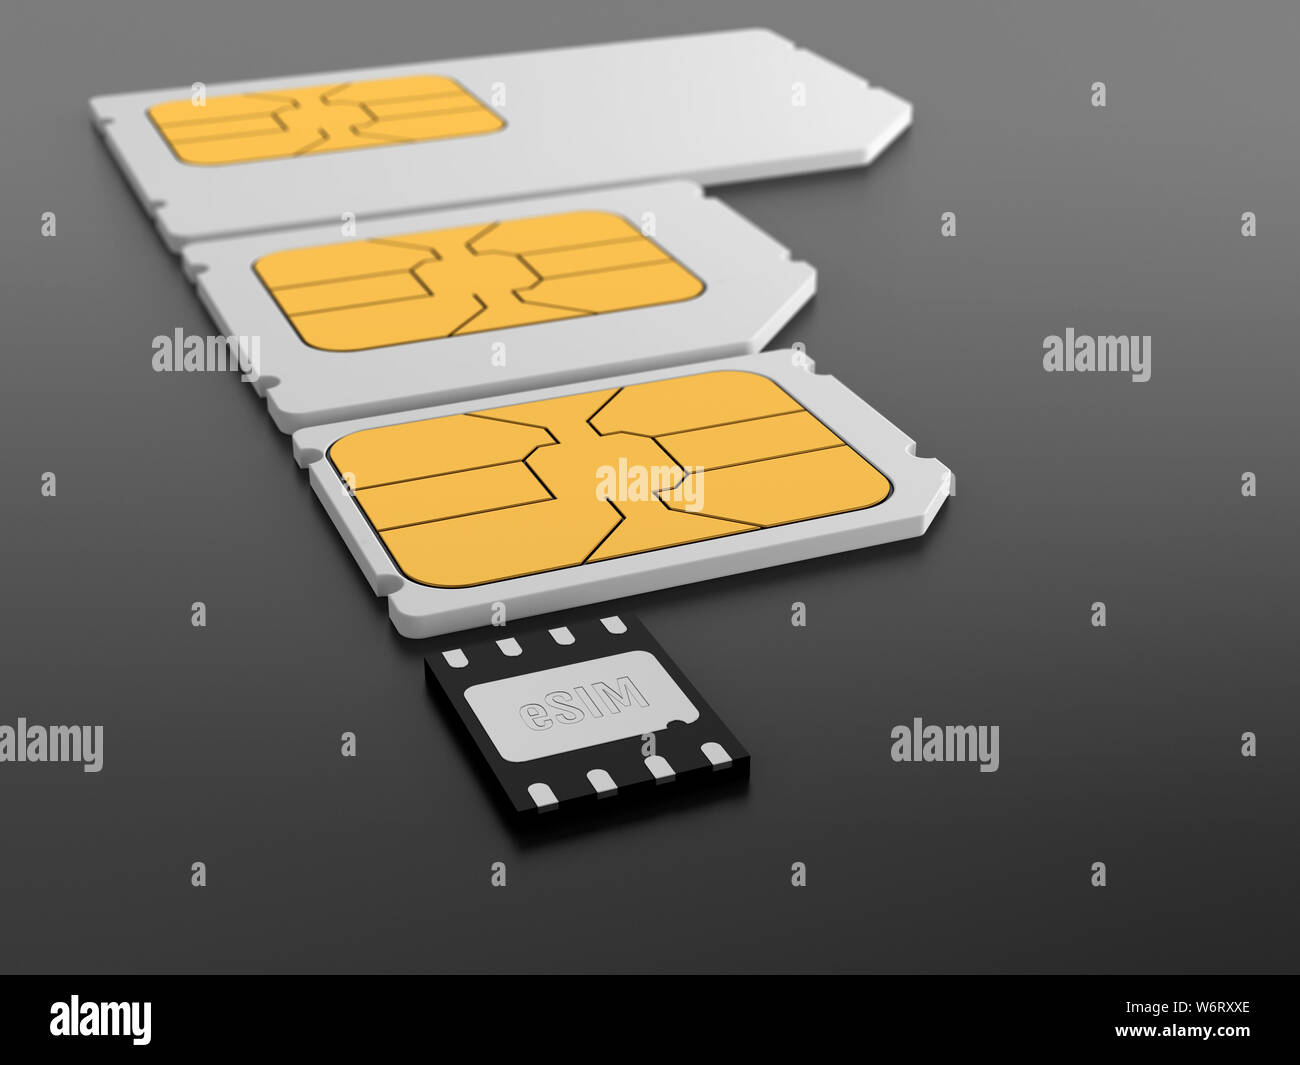 eSIM and SIM cards, illustration. Stock Photo